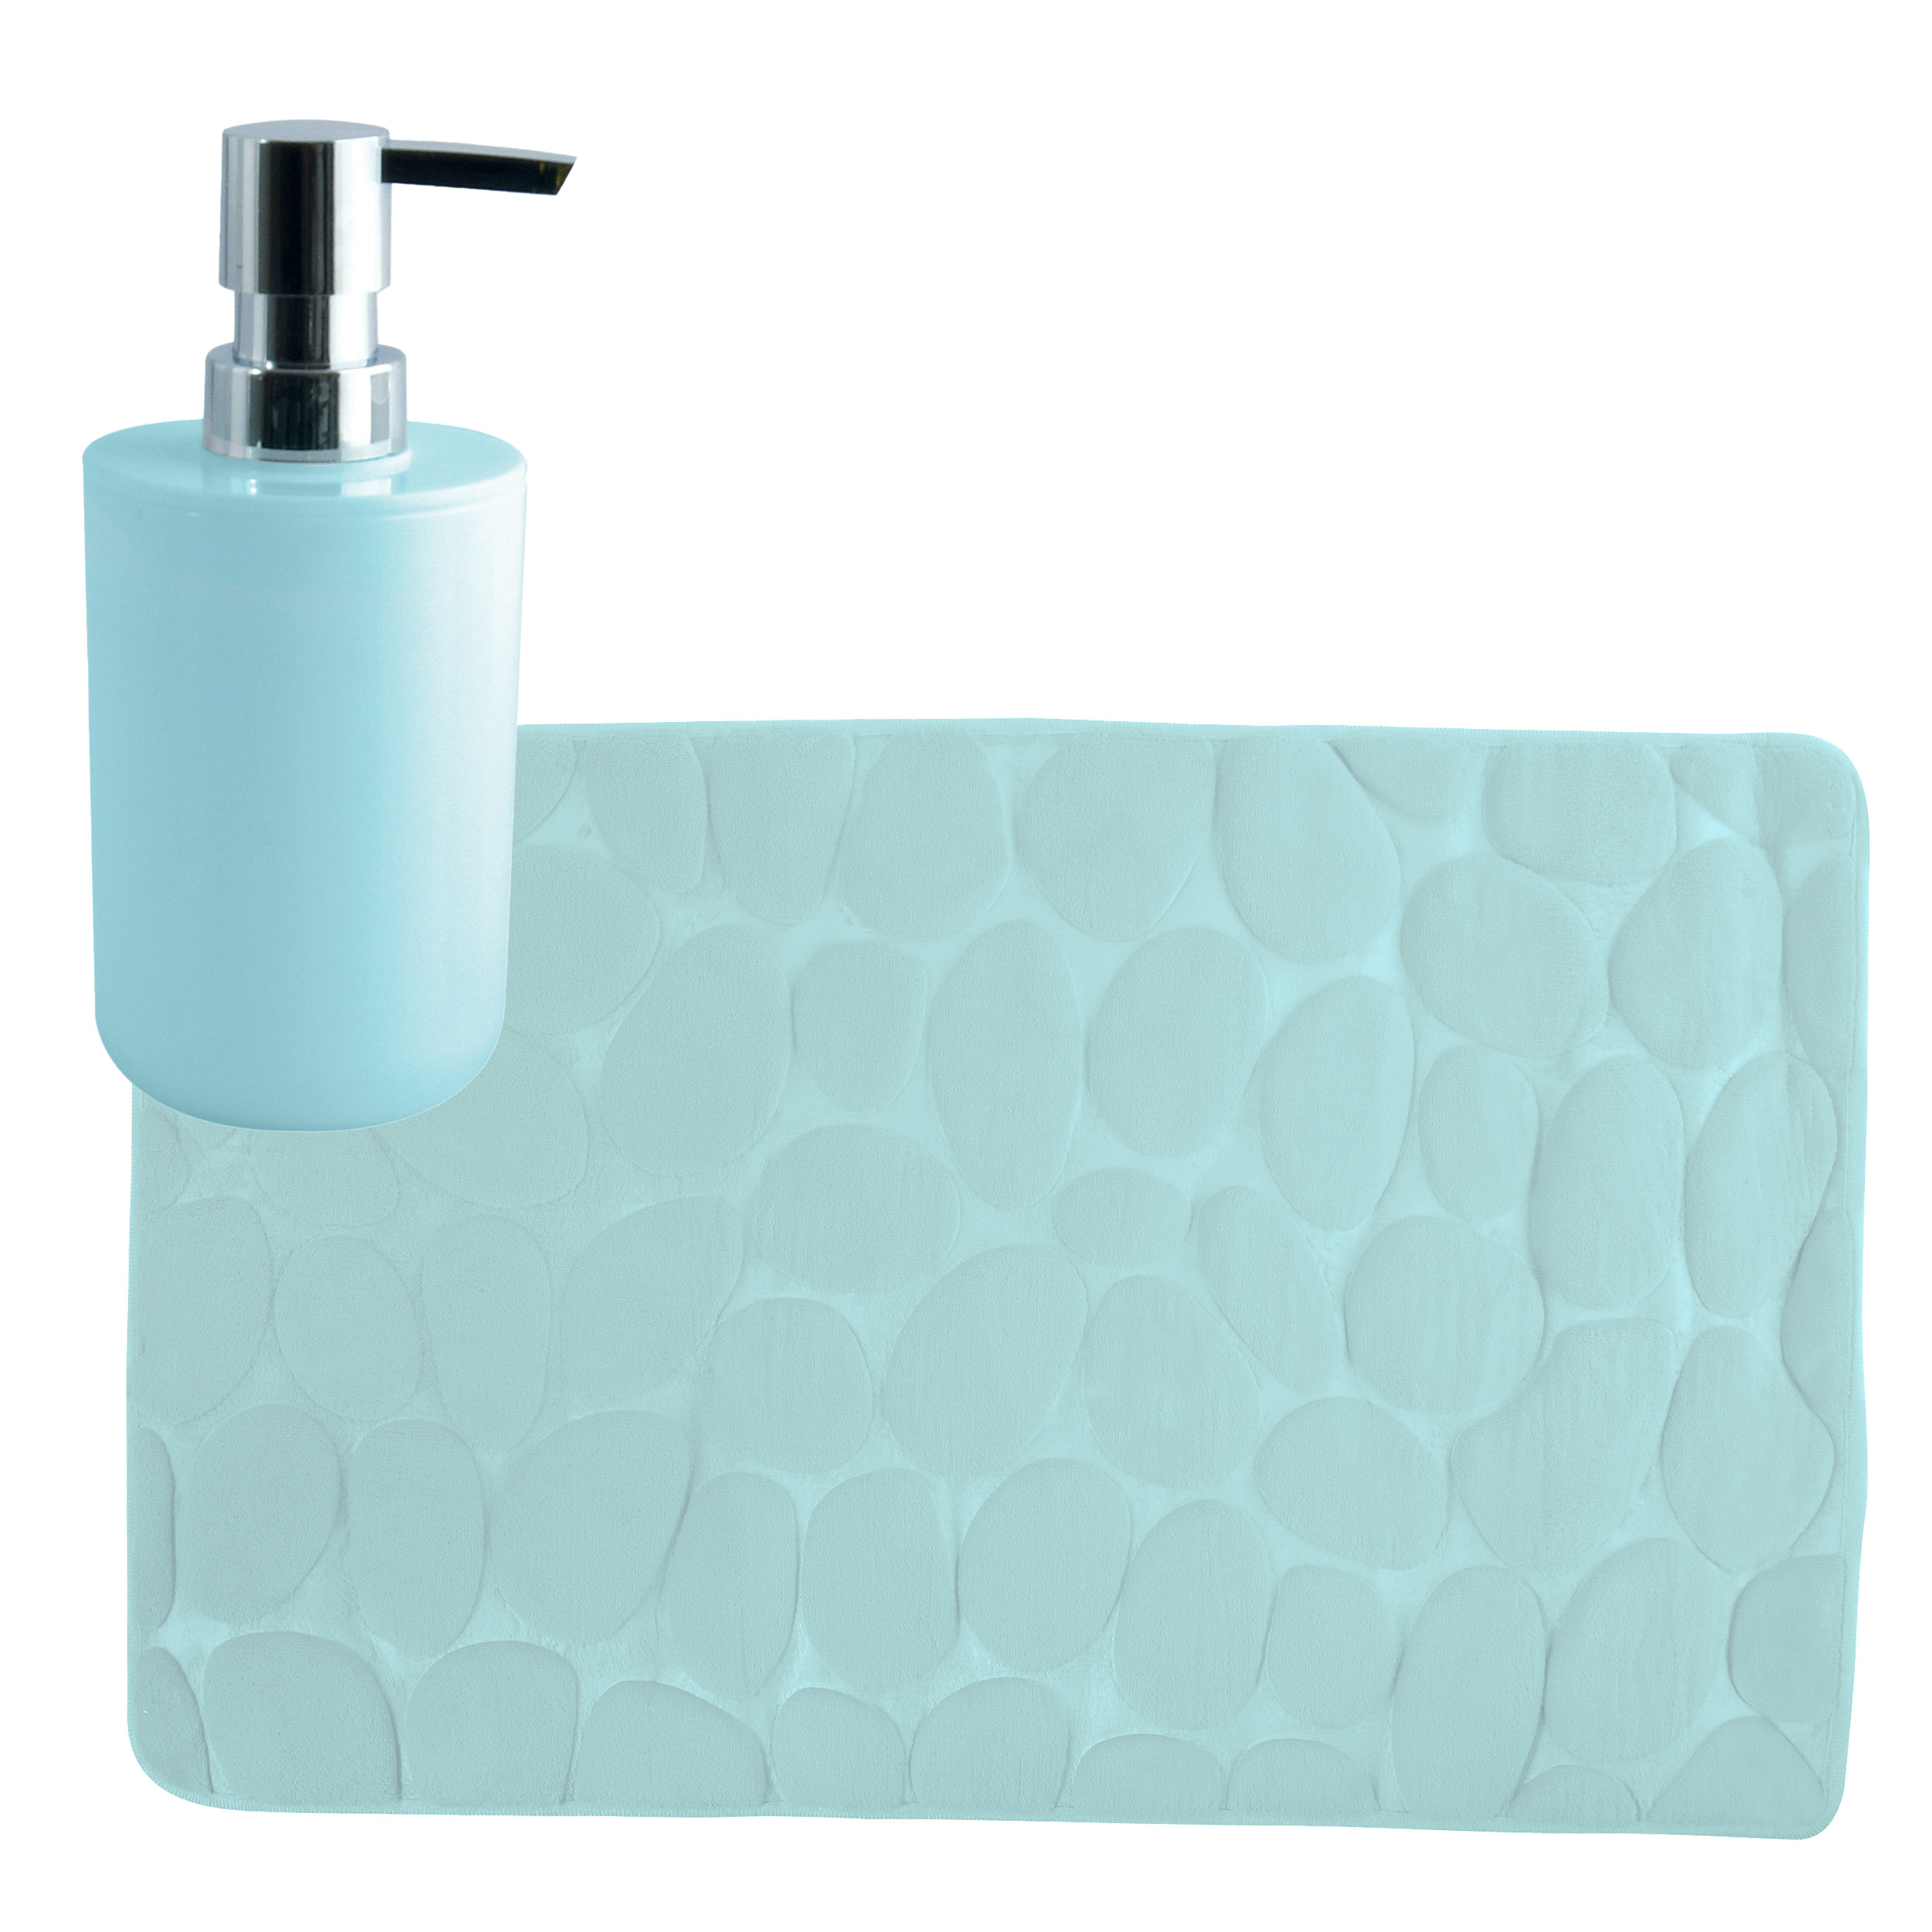 MSV badkamer droogloop mat-tapijt Kiezel 50 x 80 cm zelfde kleur zeeppompje mintgroen